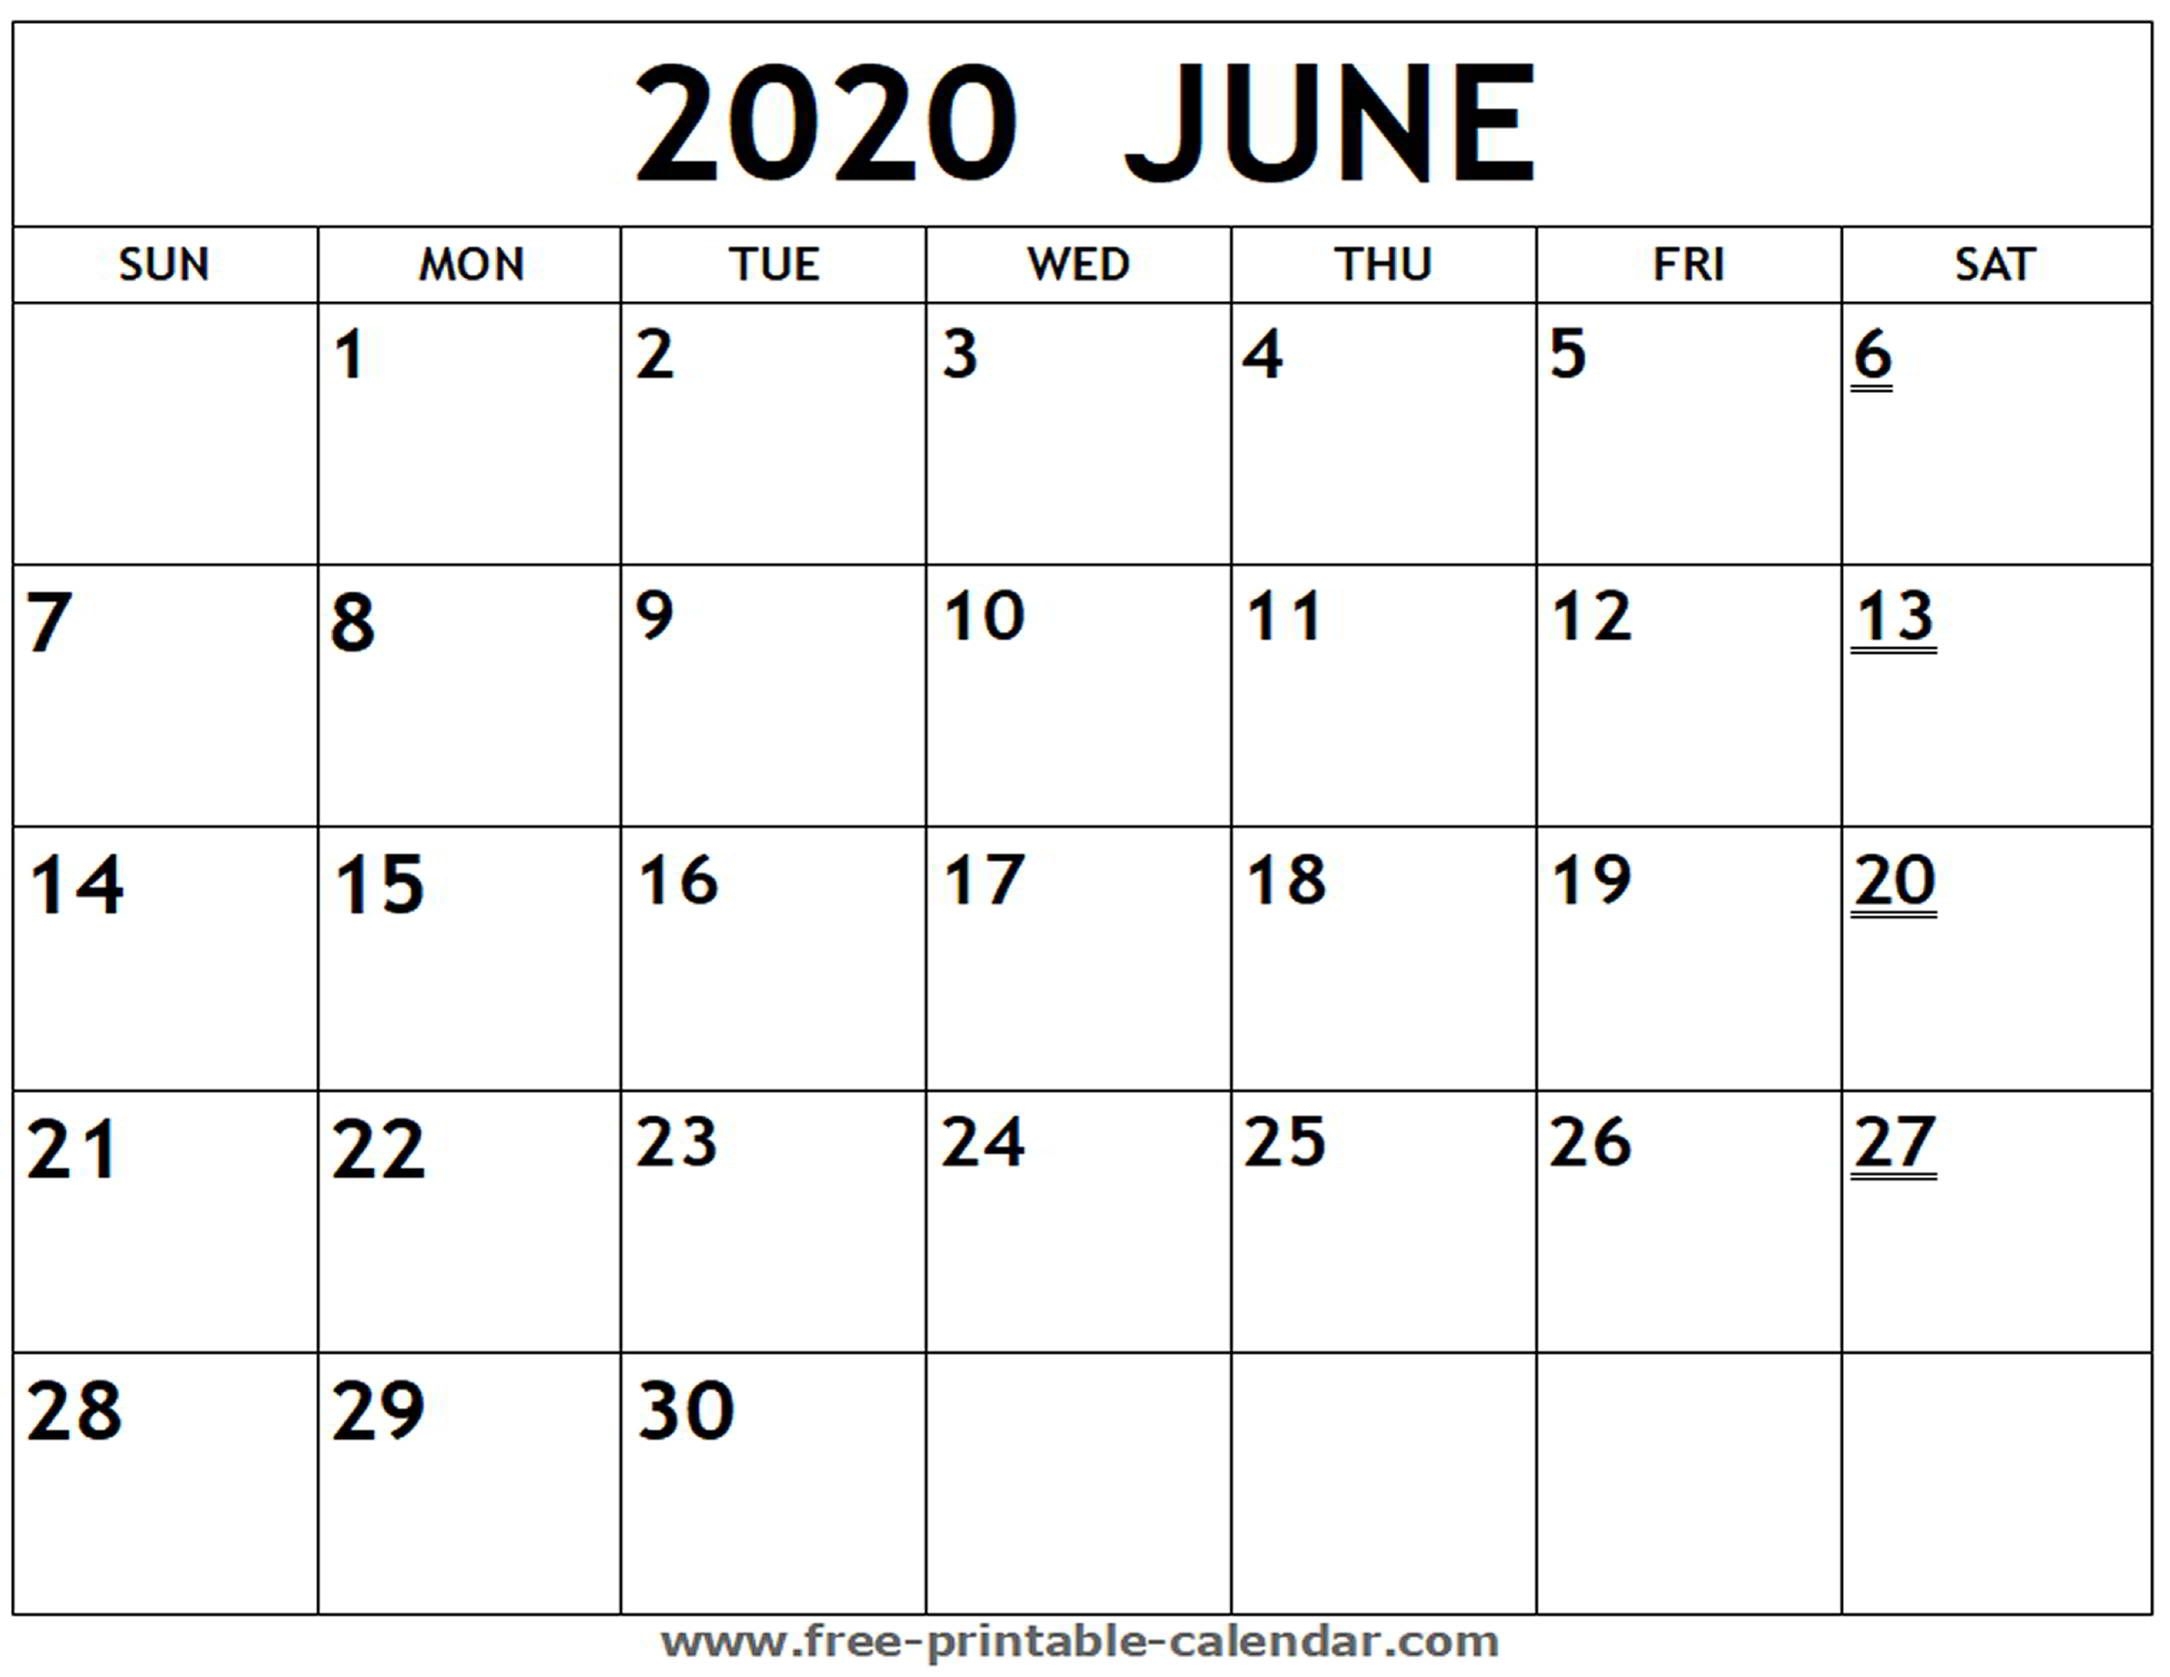 Printable 2020 June Calendar - Free-Printable-Calendar